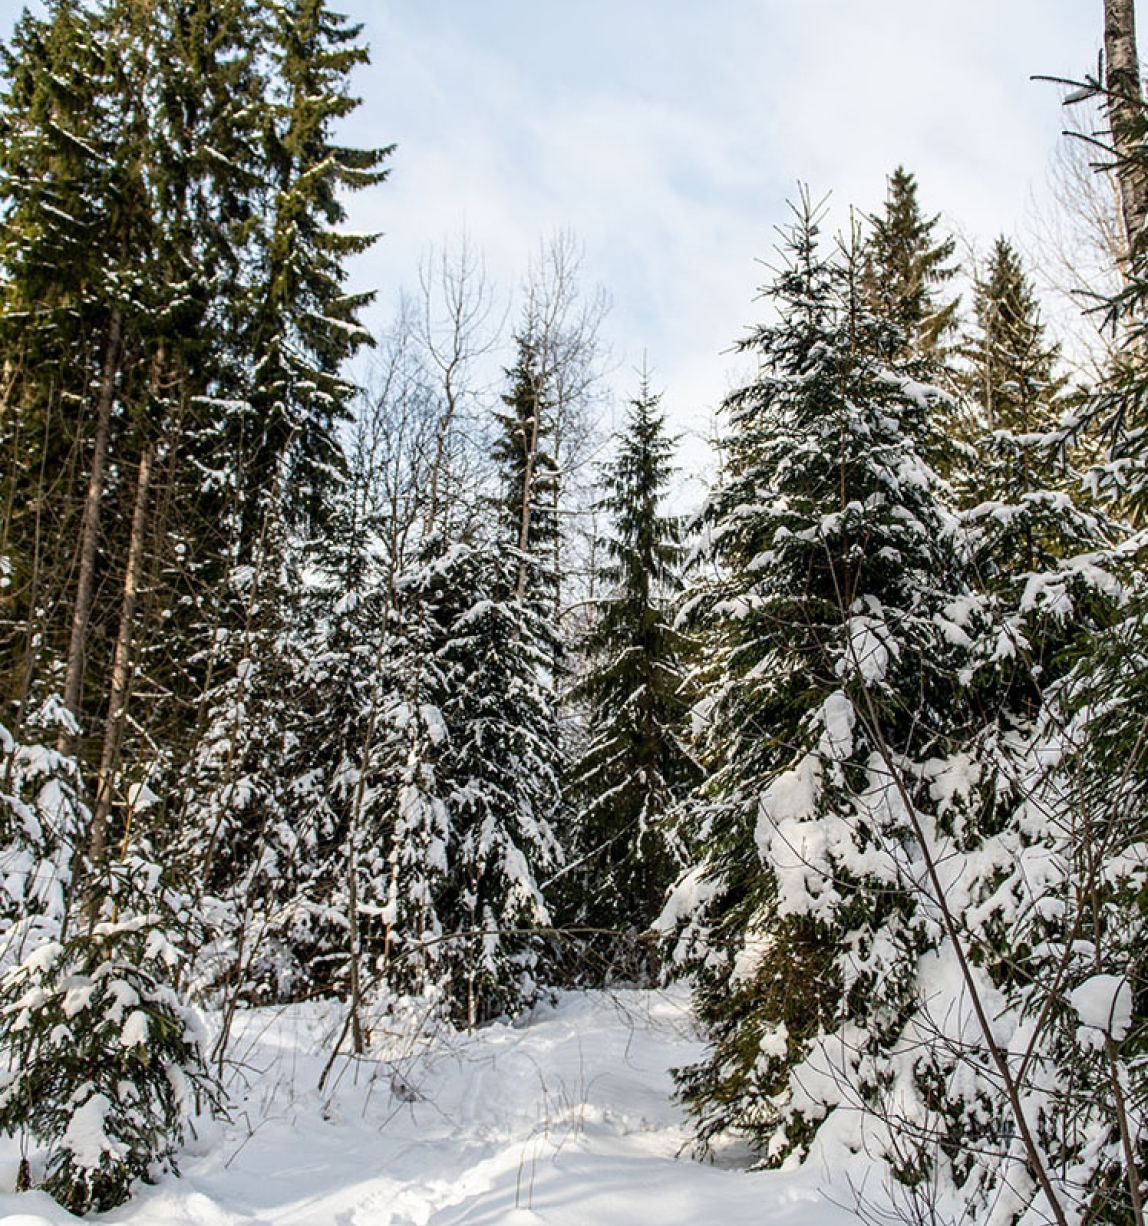 Snowy coniferous forest